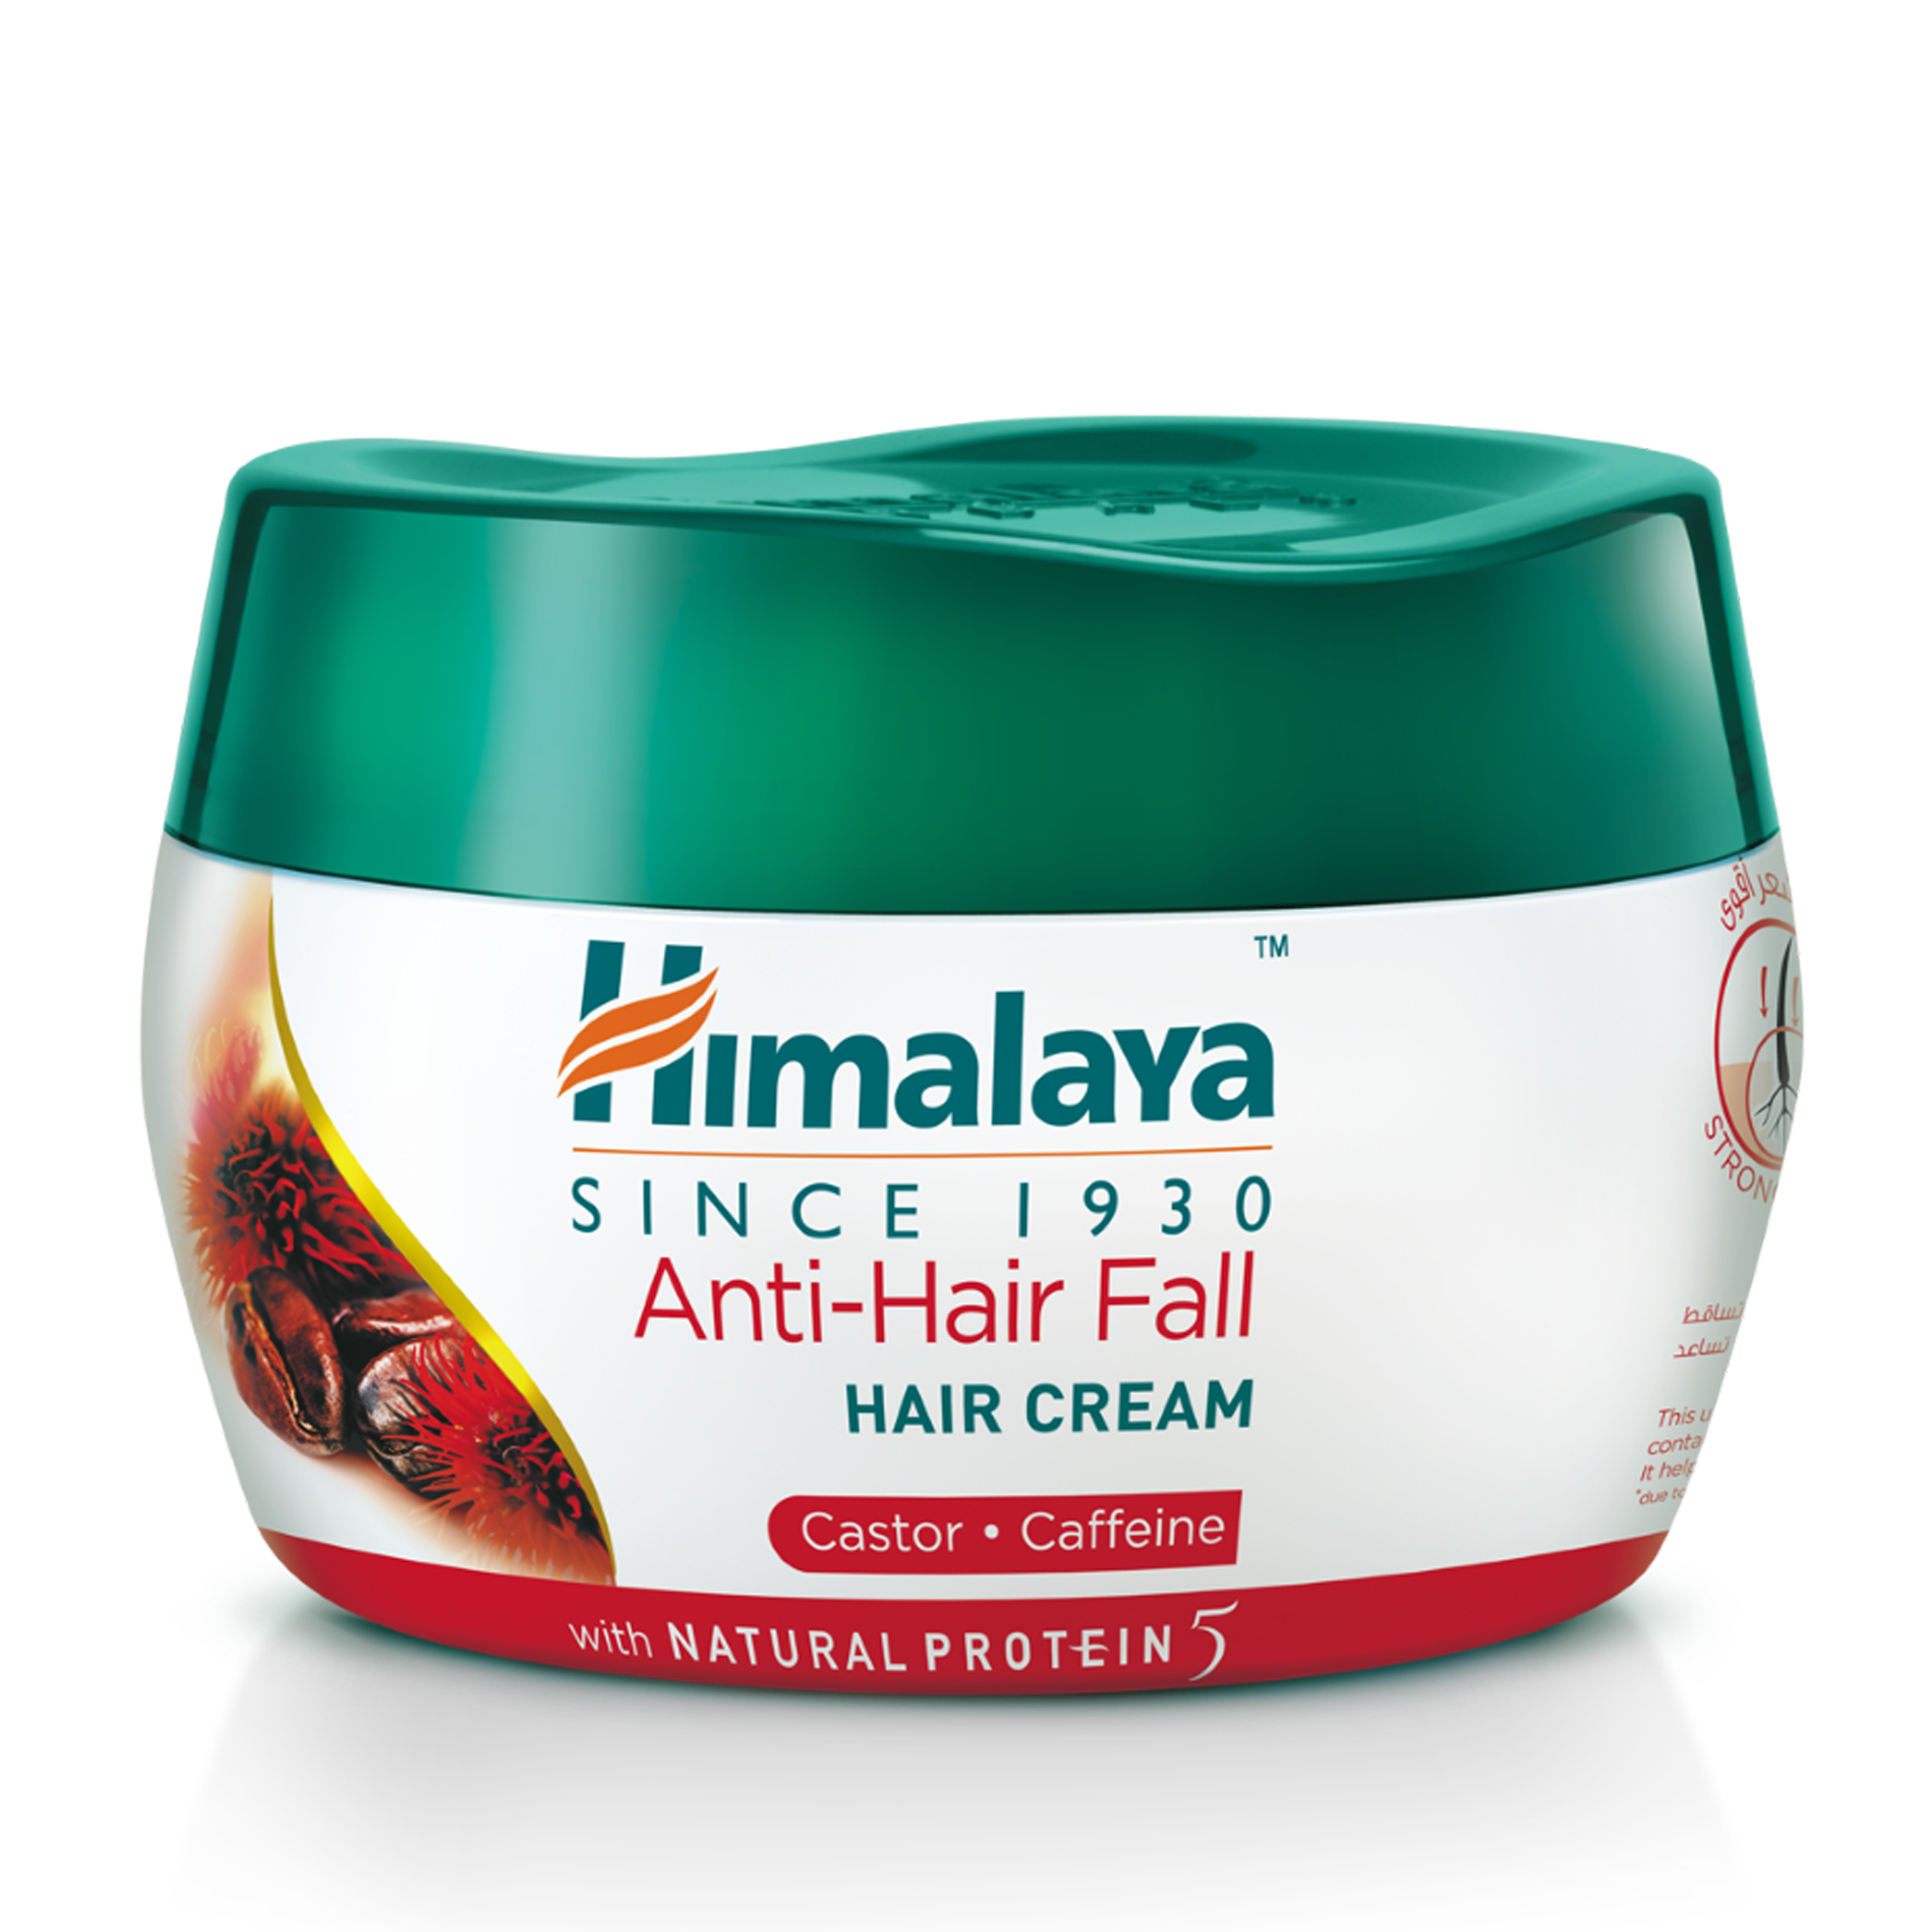 Himalaya Anti-Hair Fall Hair Cream 210ml - Reduces Hair fall